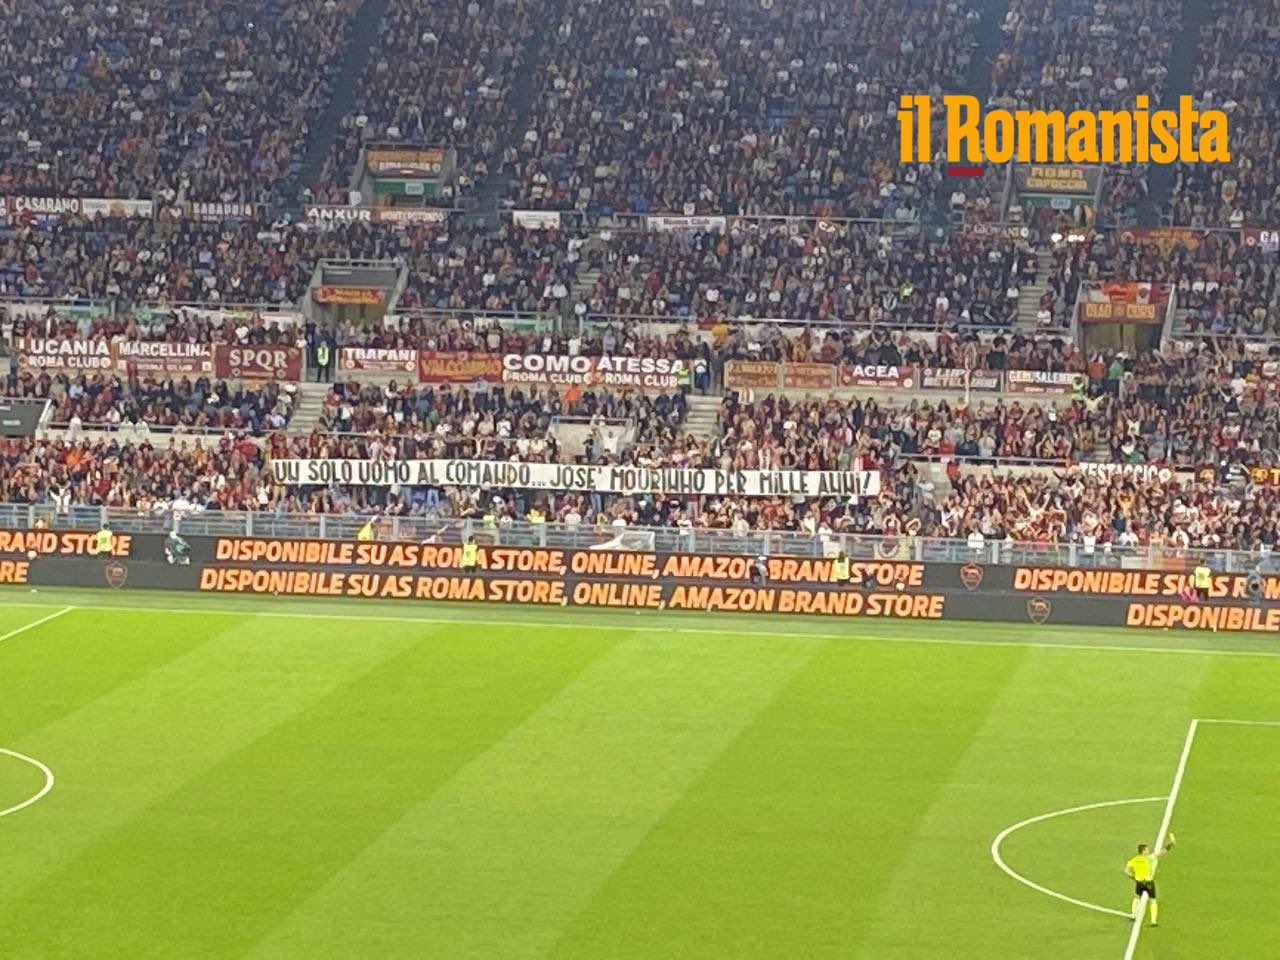 Striscione per Mourinho durante Roma-Spezia